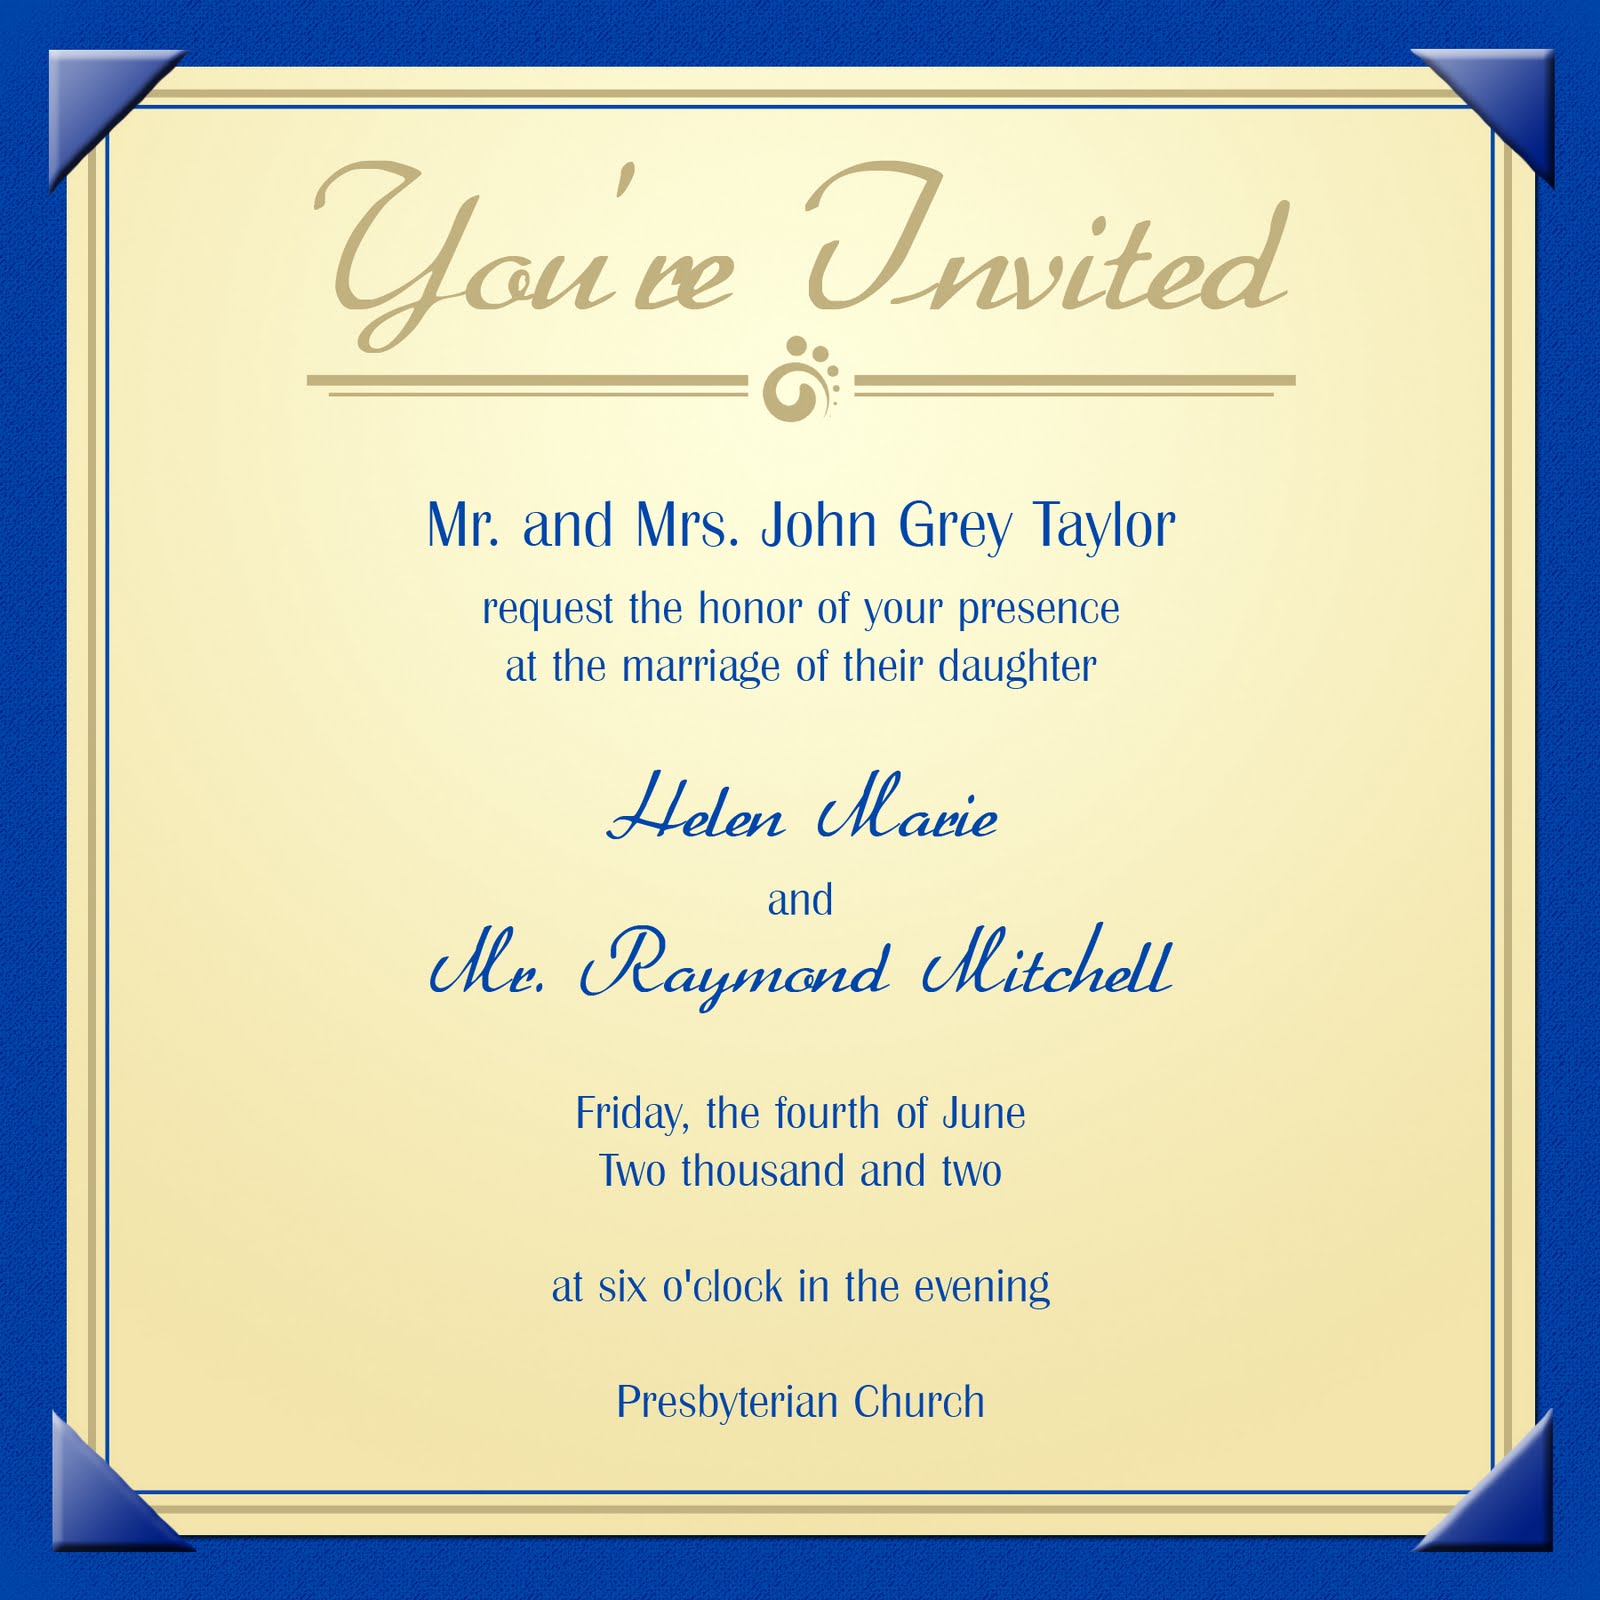 wedding invitation cards designs